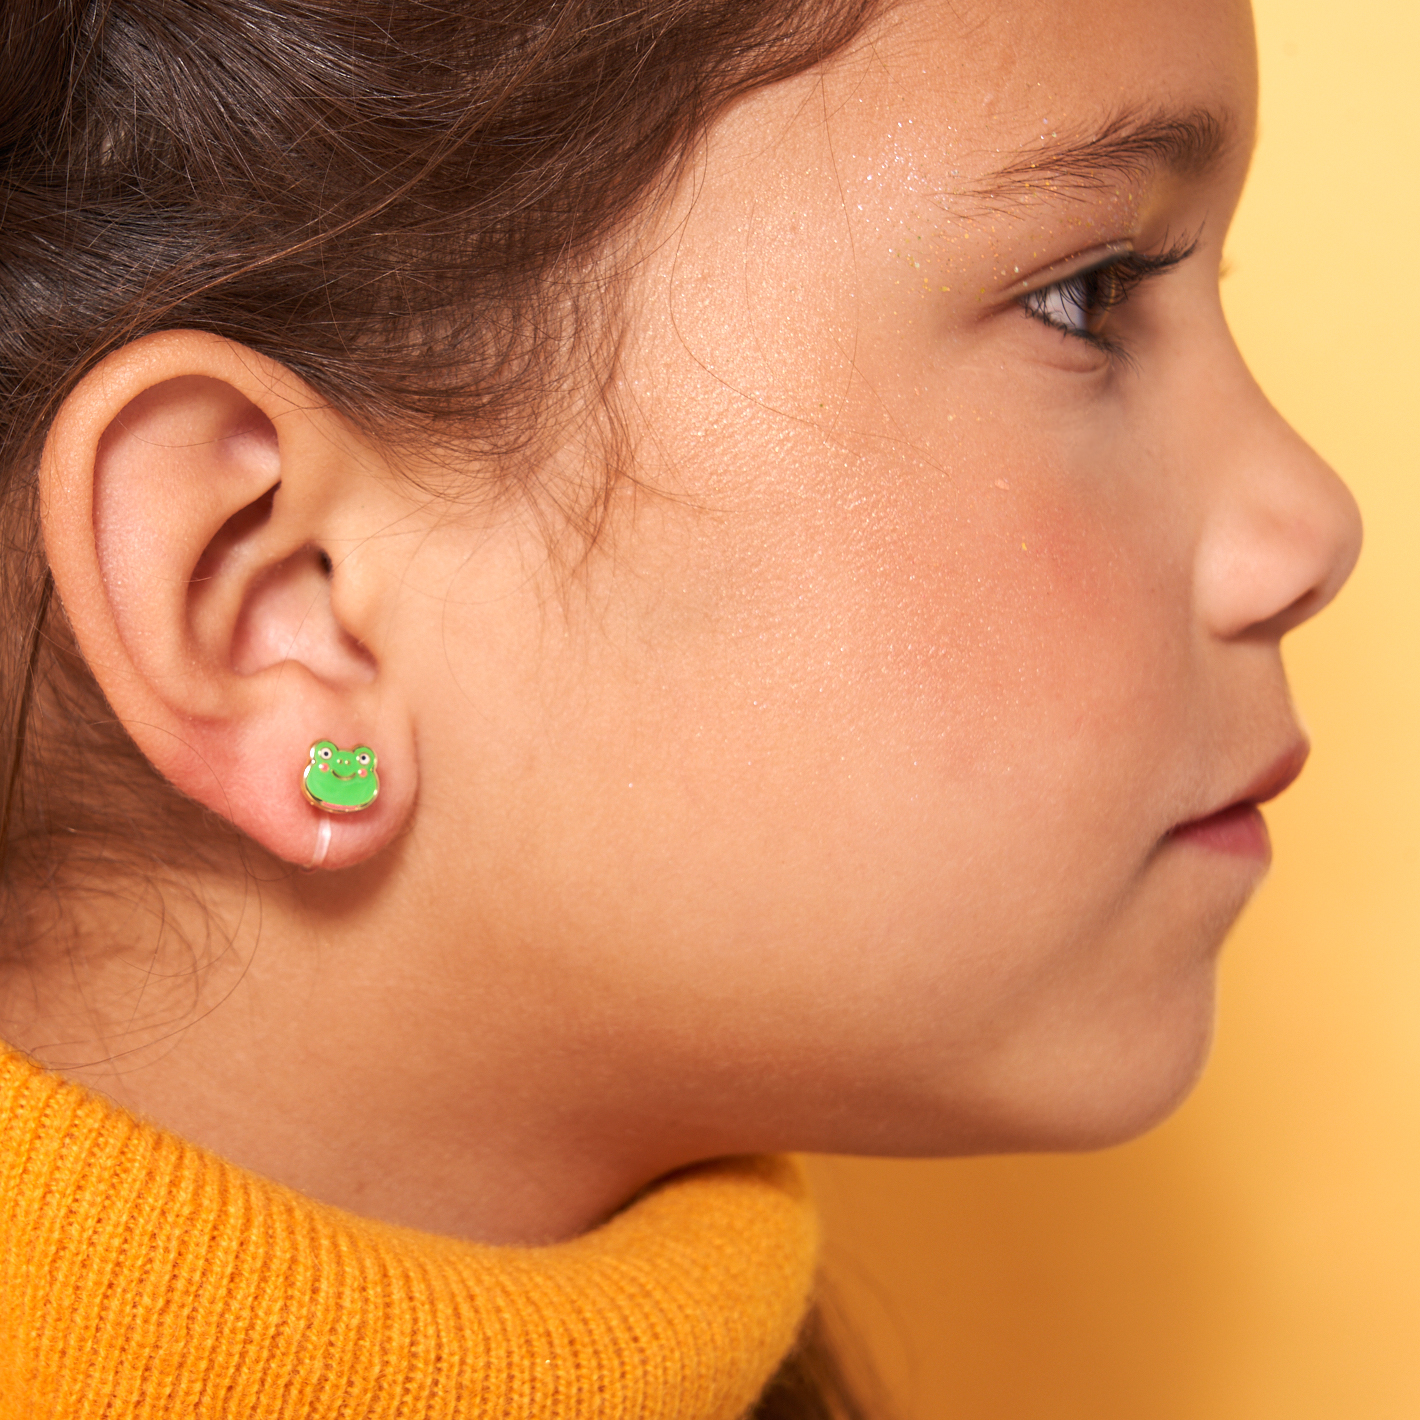 Girl Nation's Comfortable Clip-On Earrings